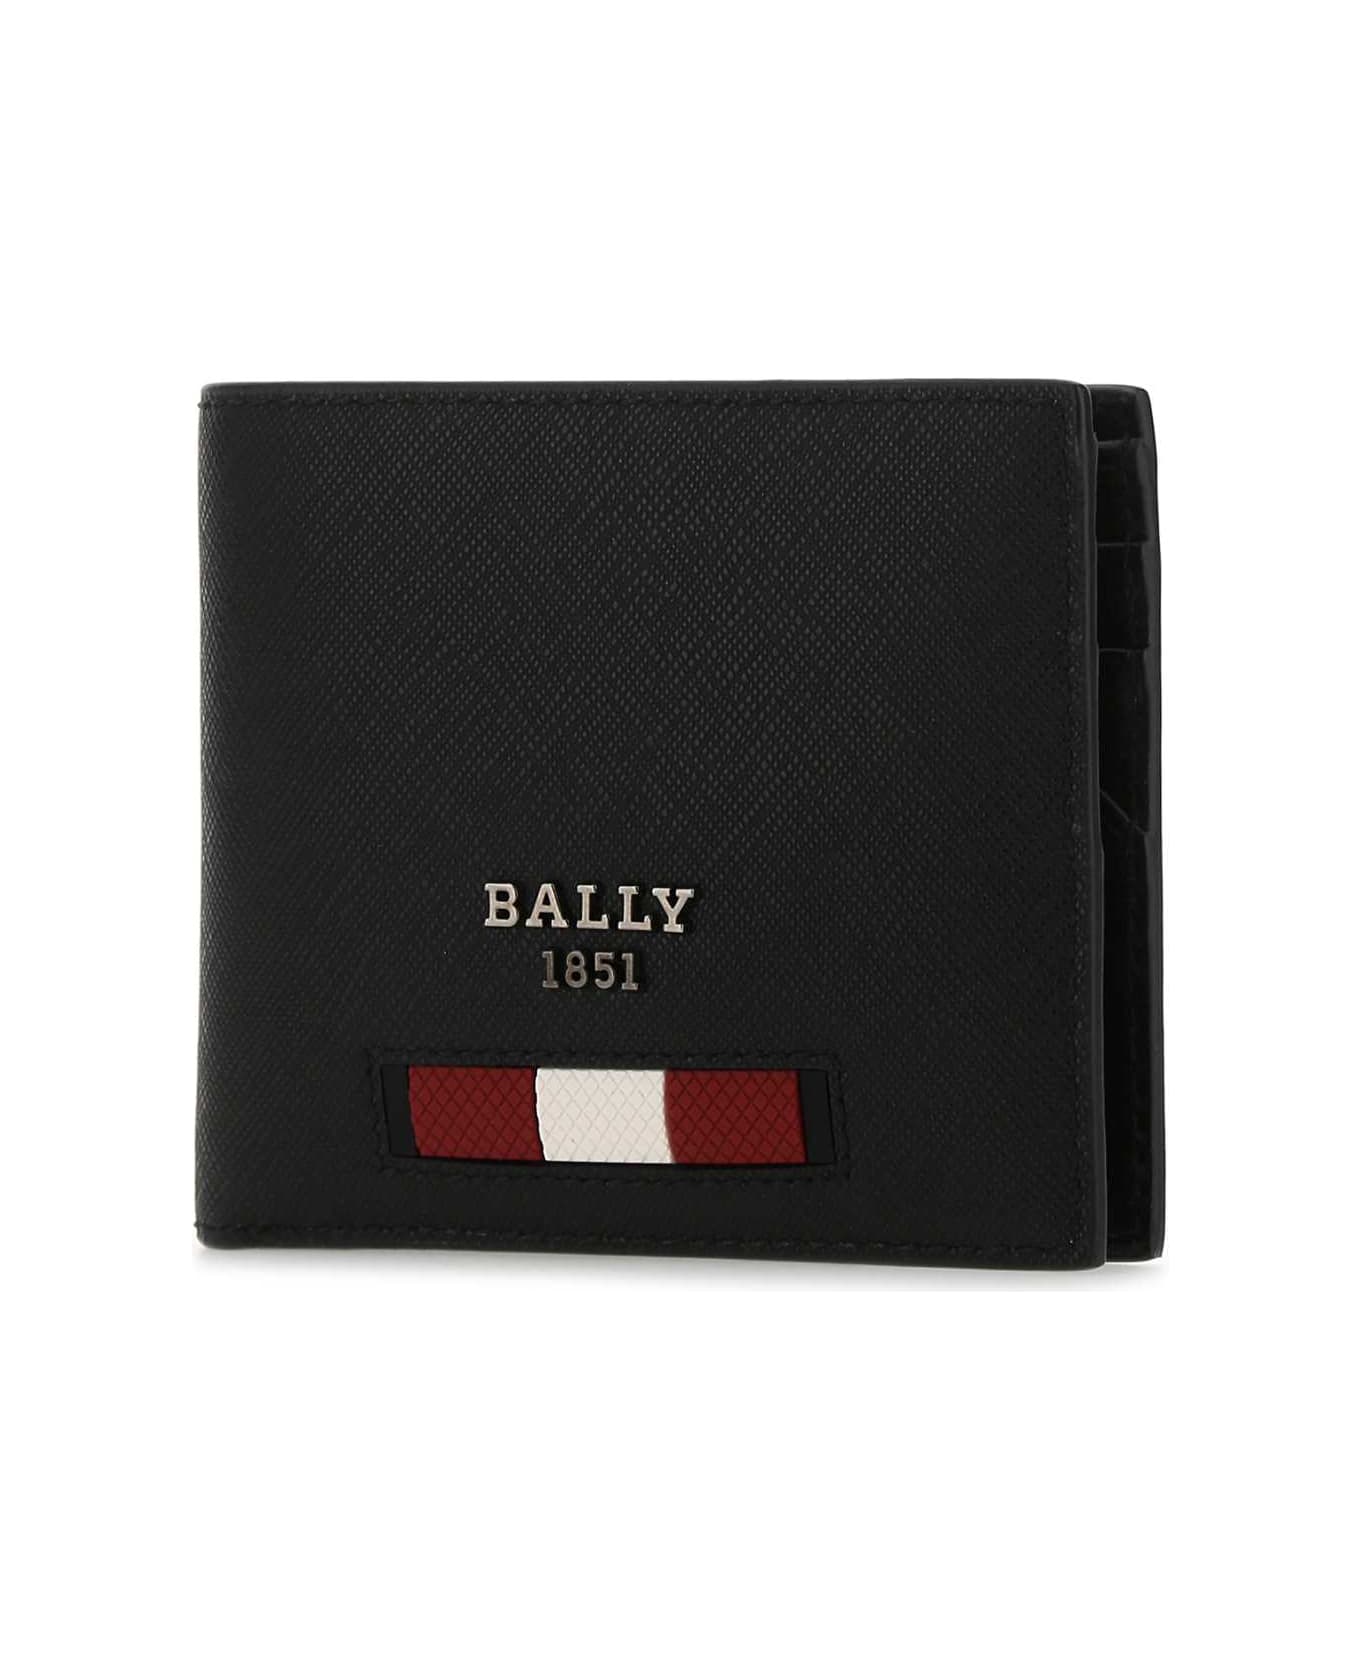 Bally Black Leather Bevye Wallet - F106 財布